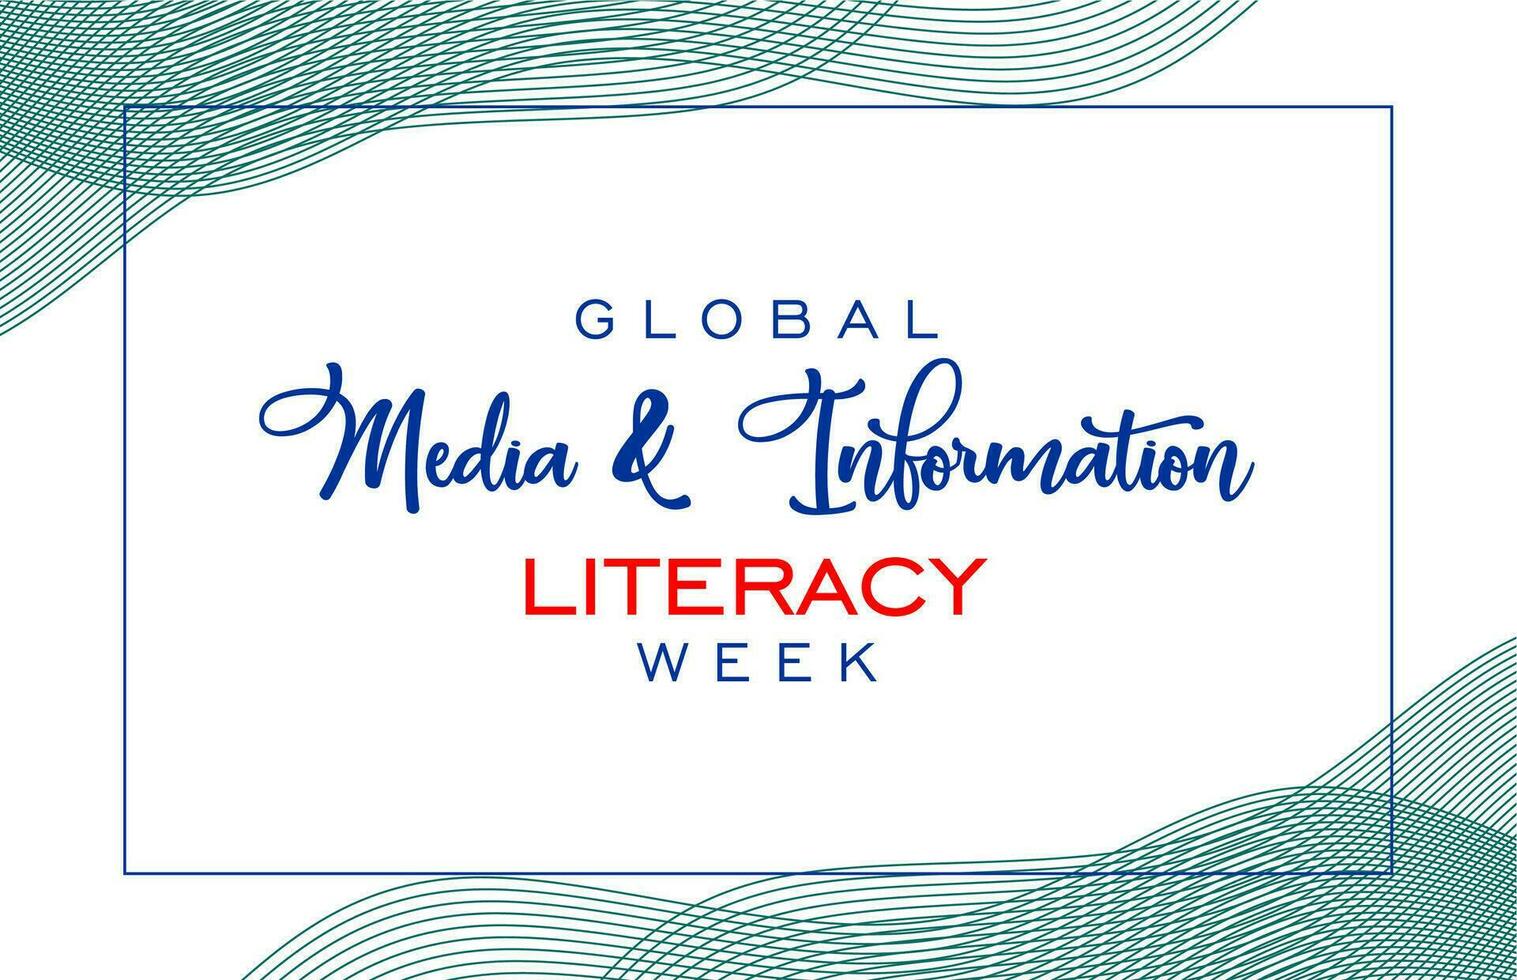 global media and information literacy week vector